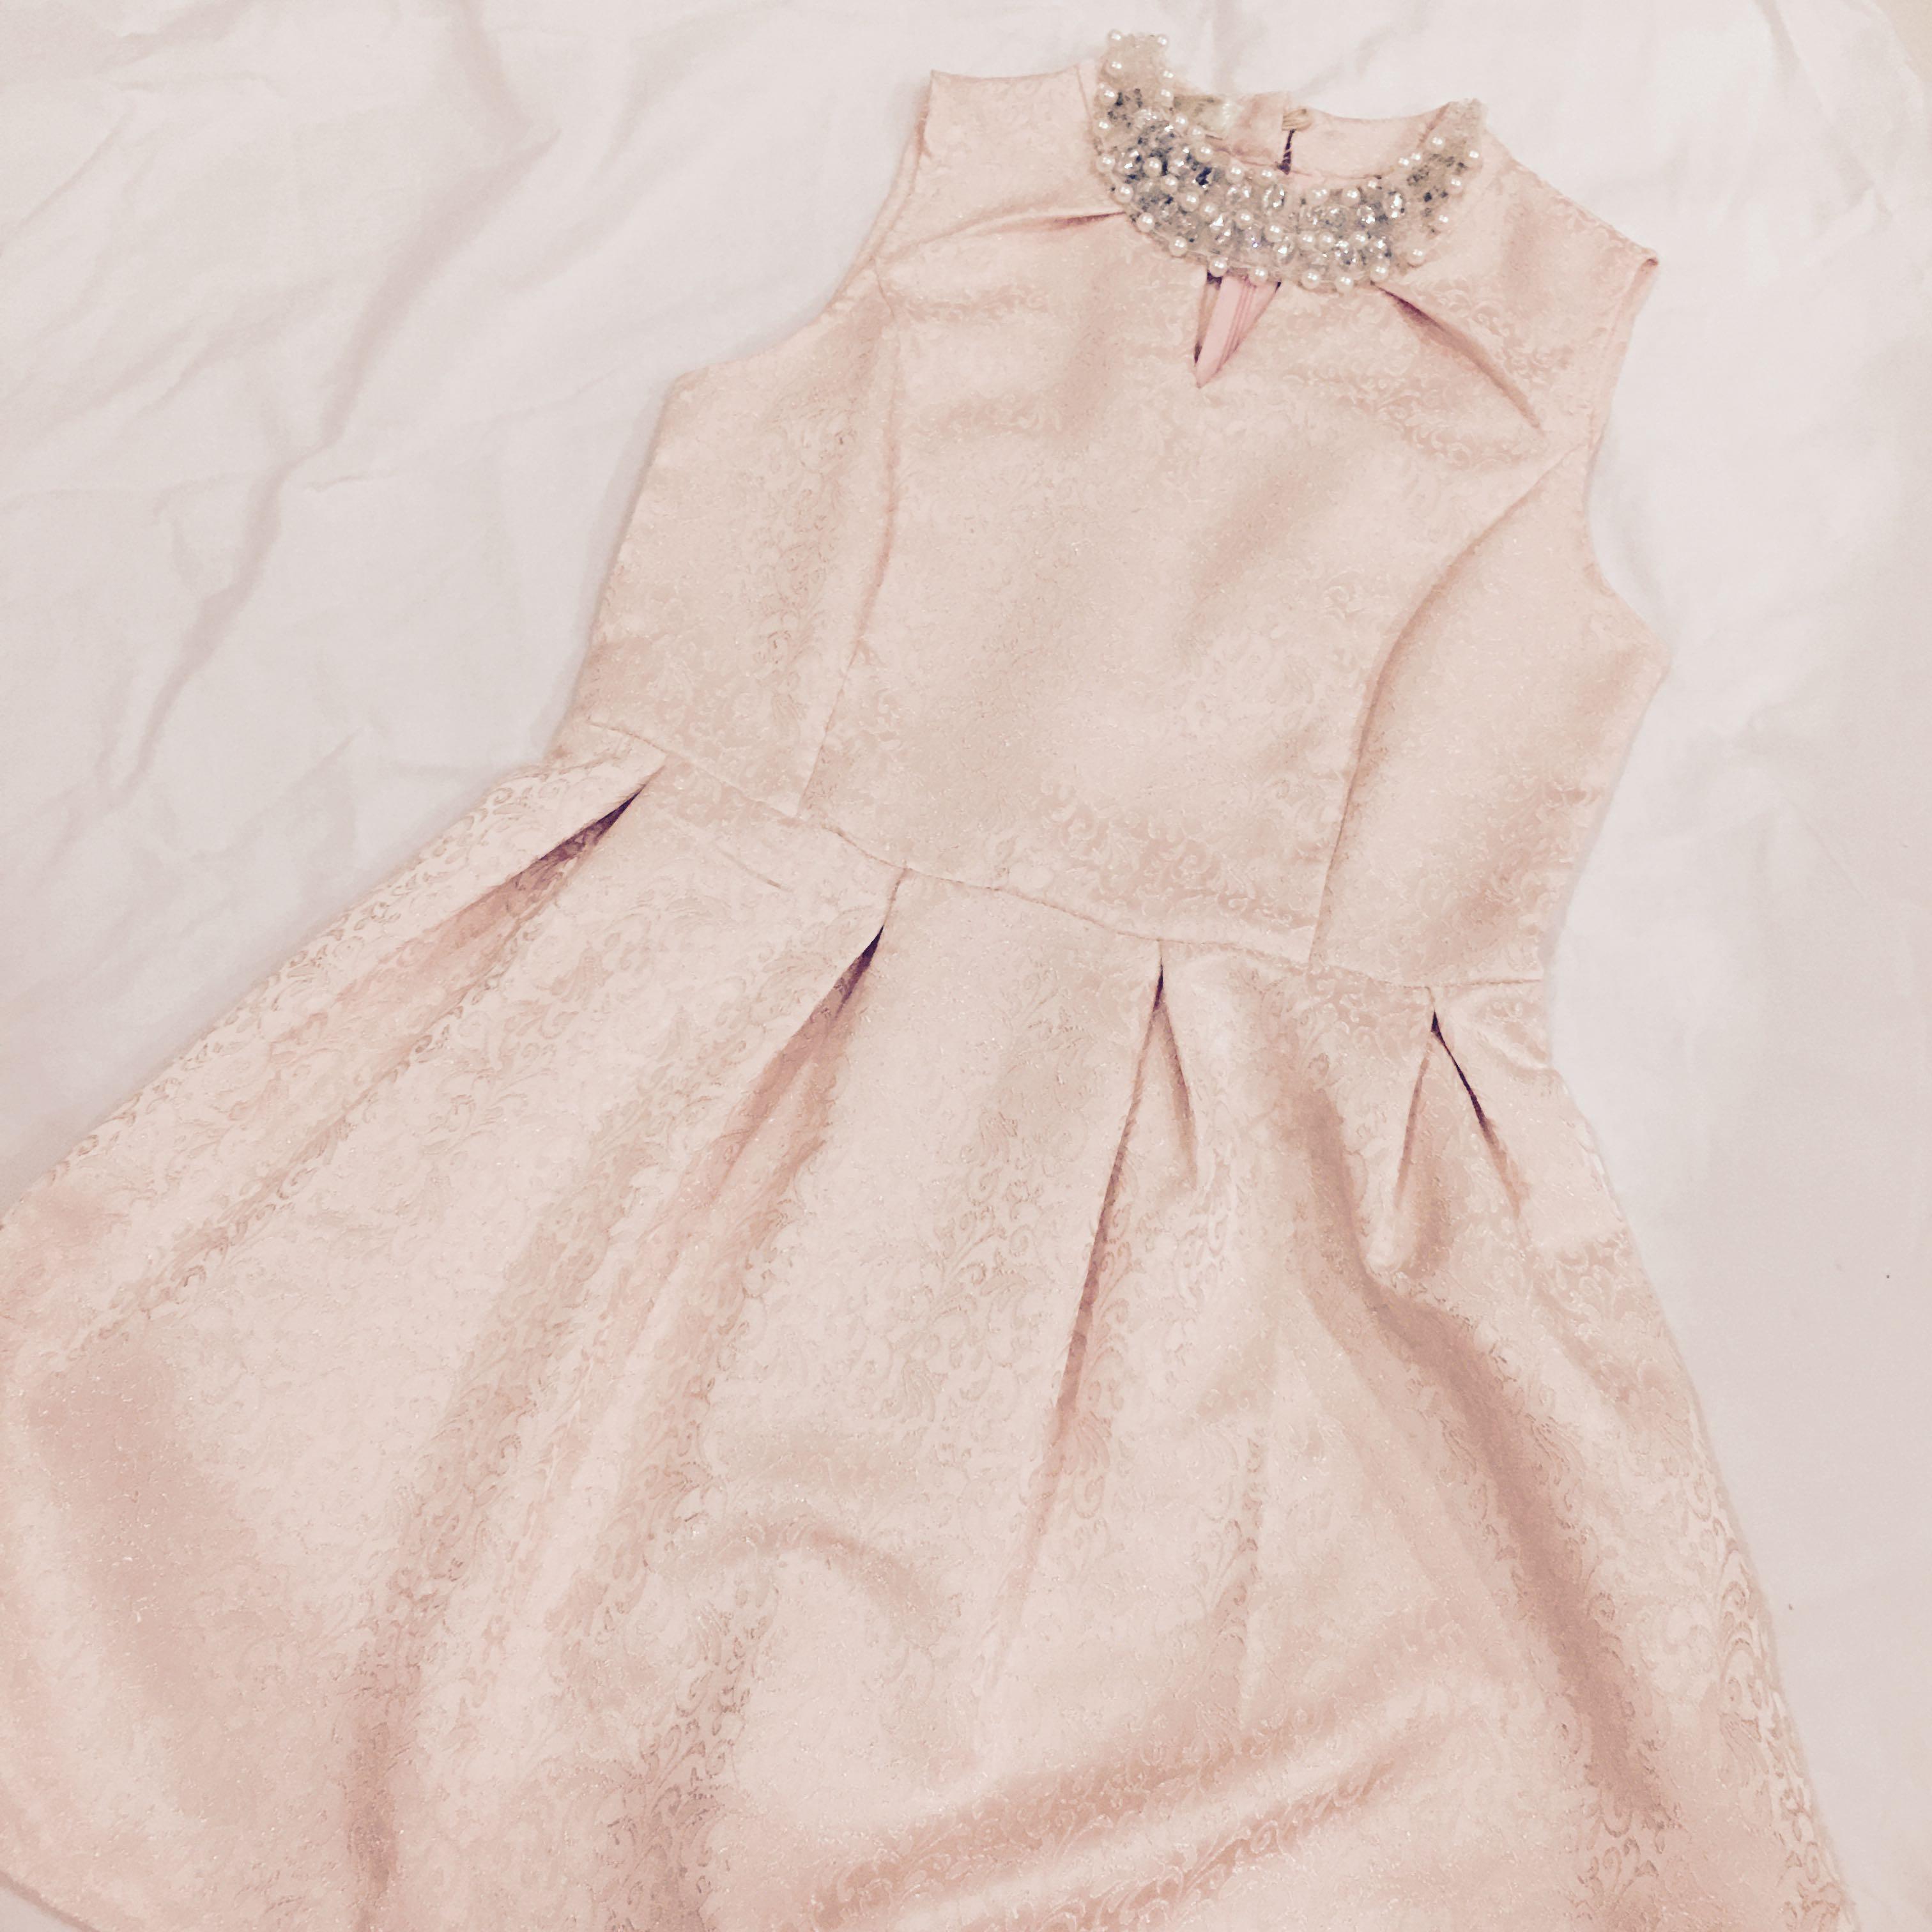 elegant cute dresses